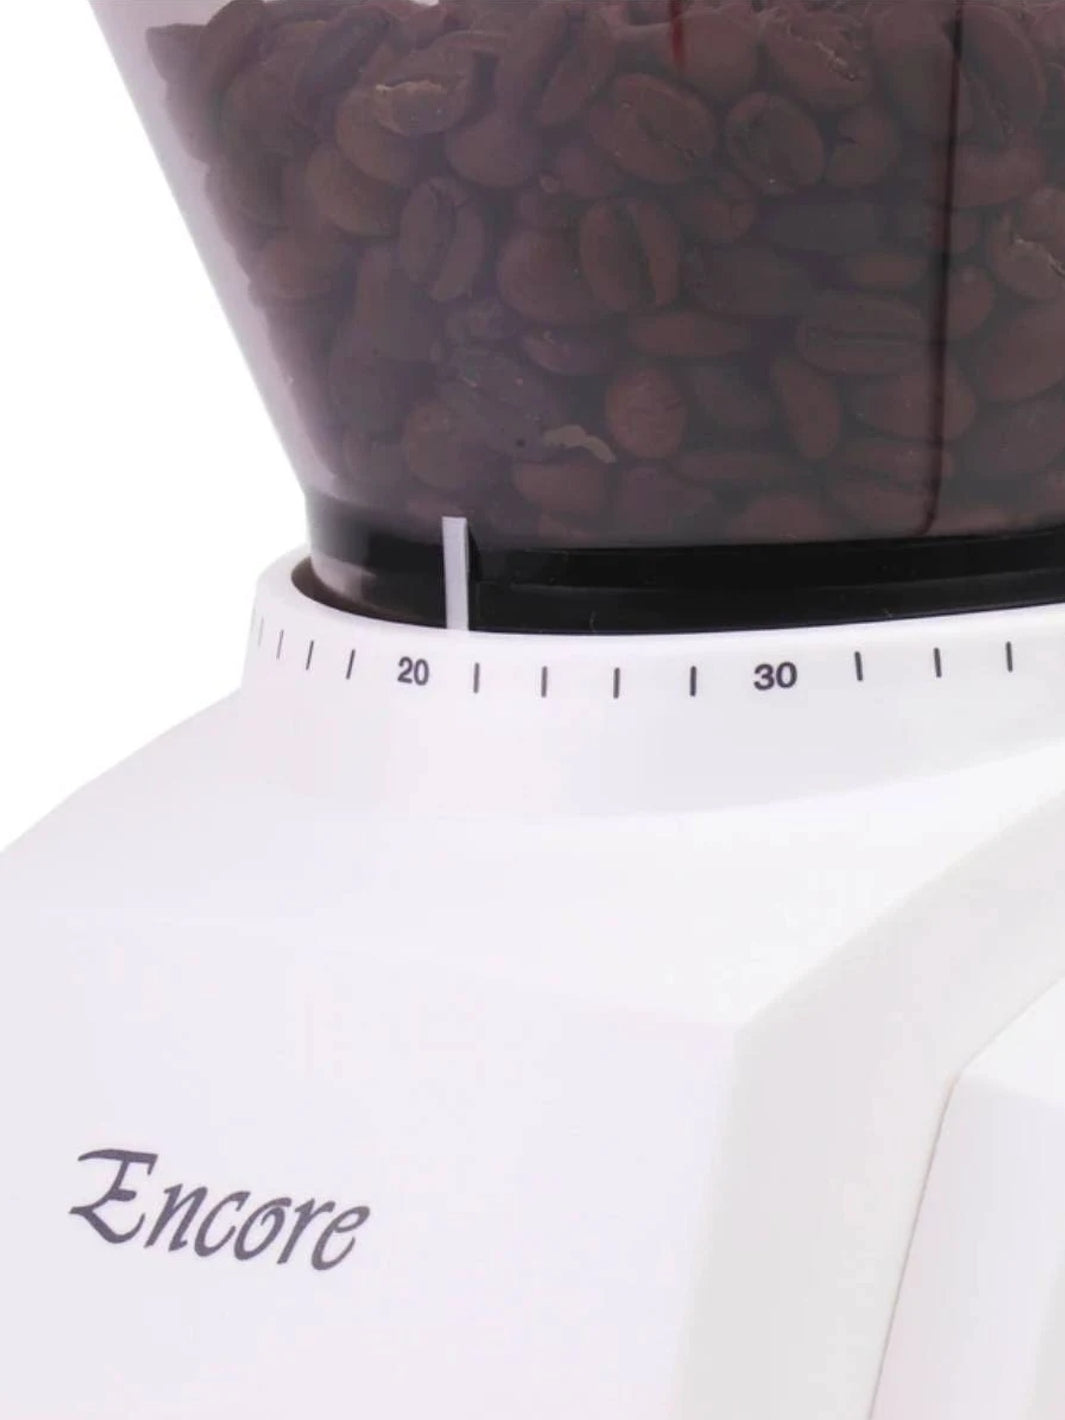 BARATZA Encore Coffee Grinder (120V)